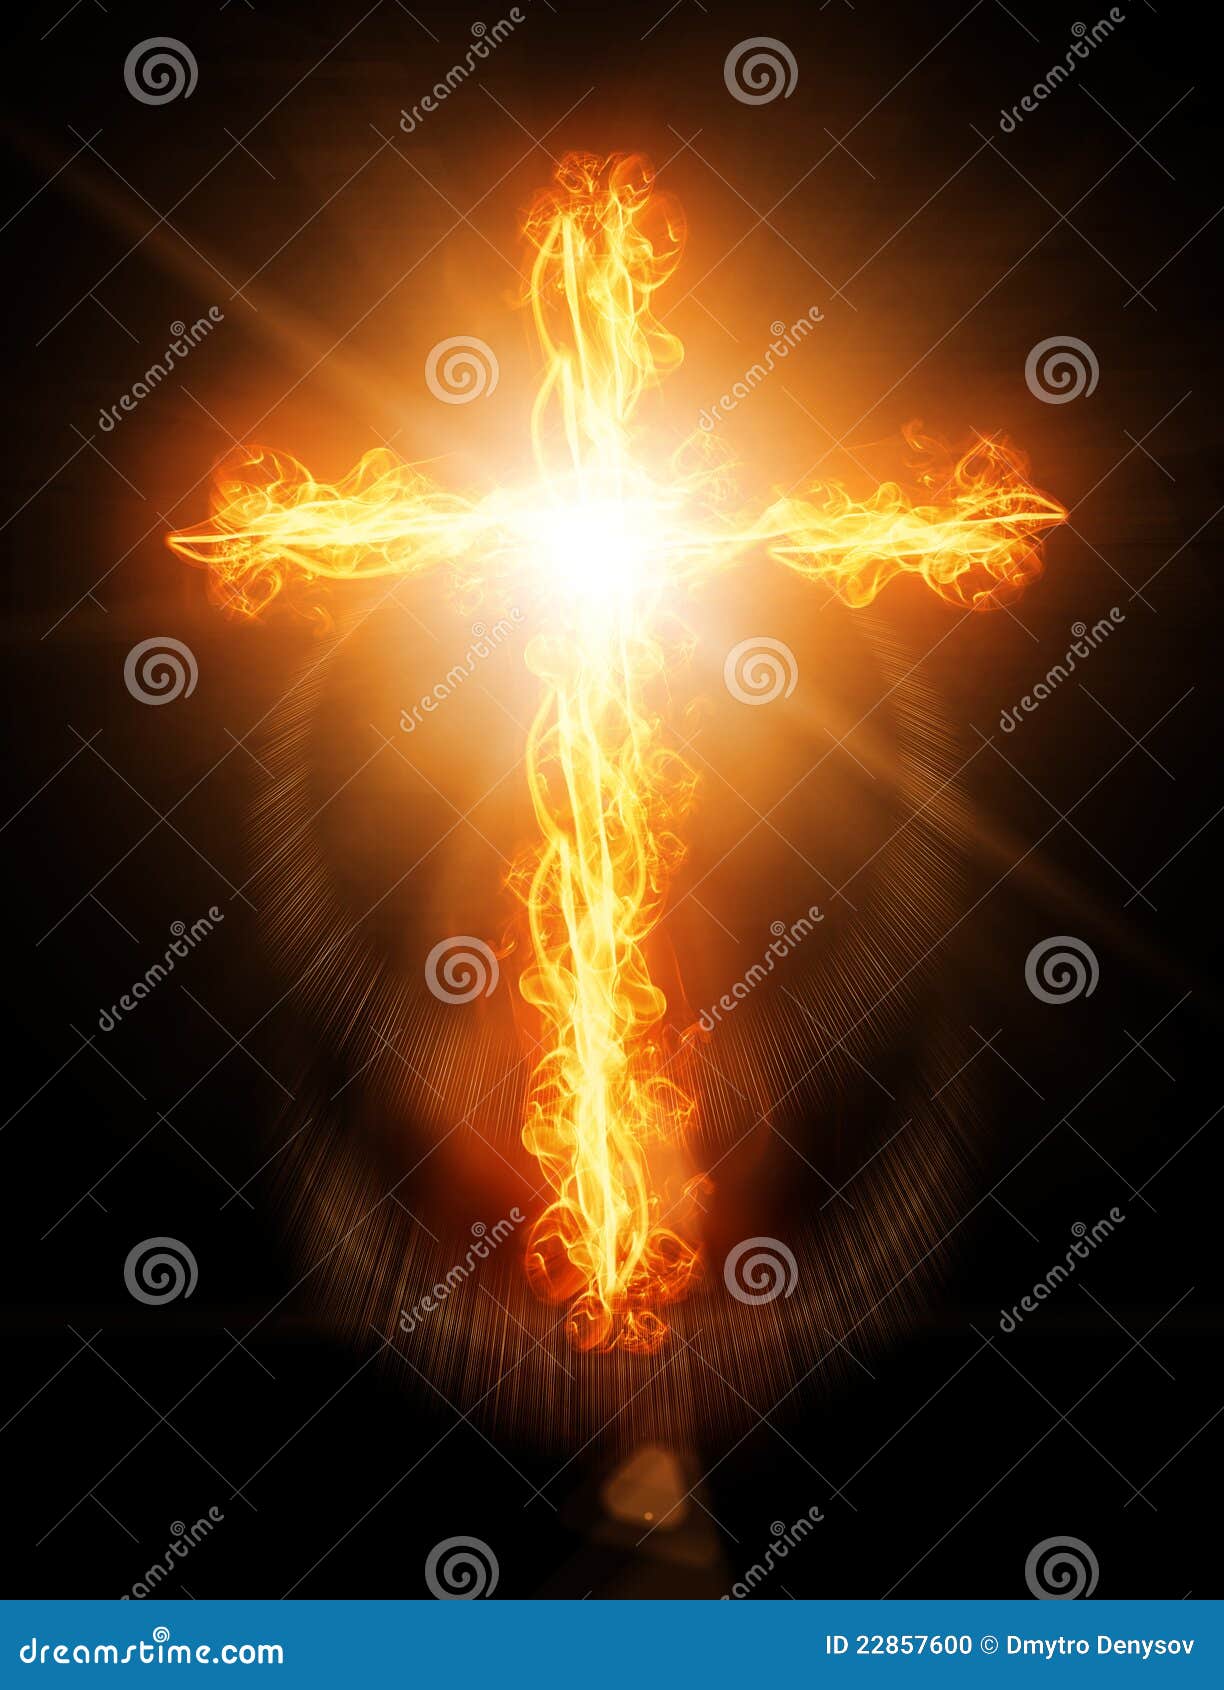 Cross burning in fire stock illustration. Illustration of death - 22857600